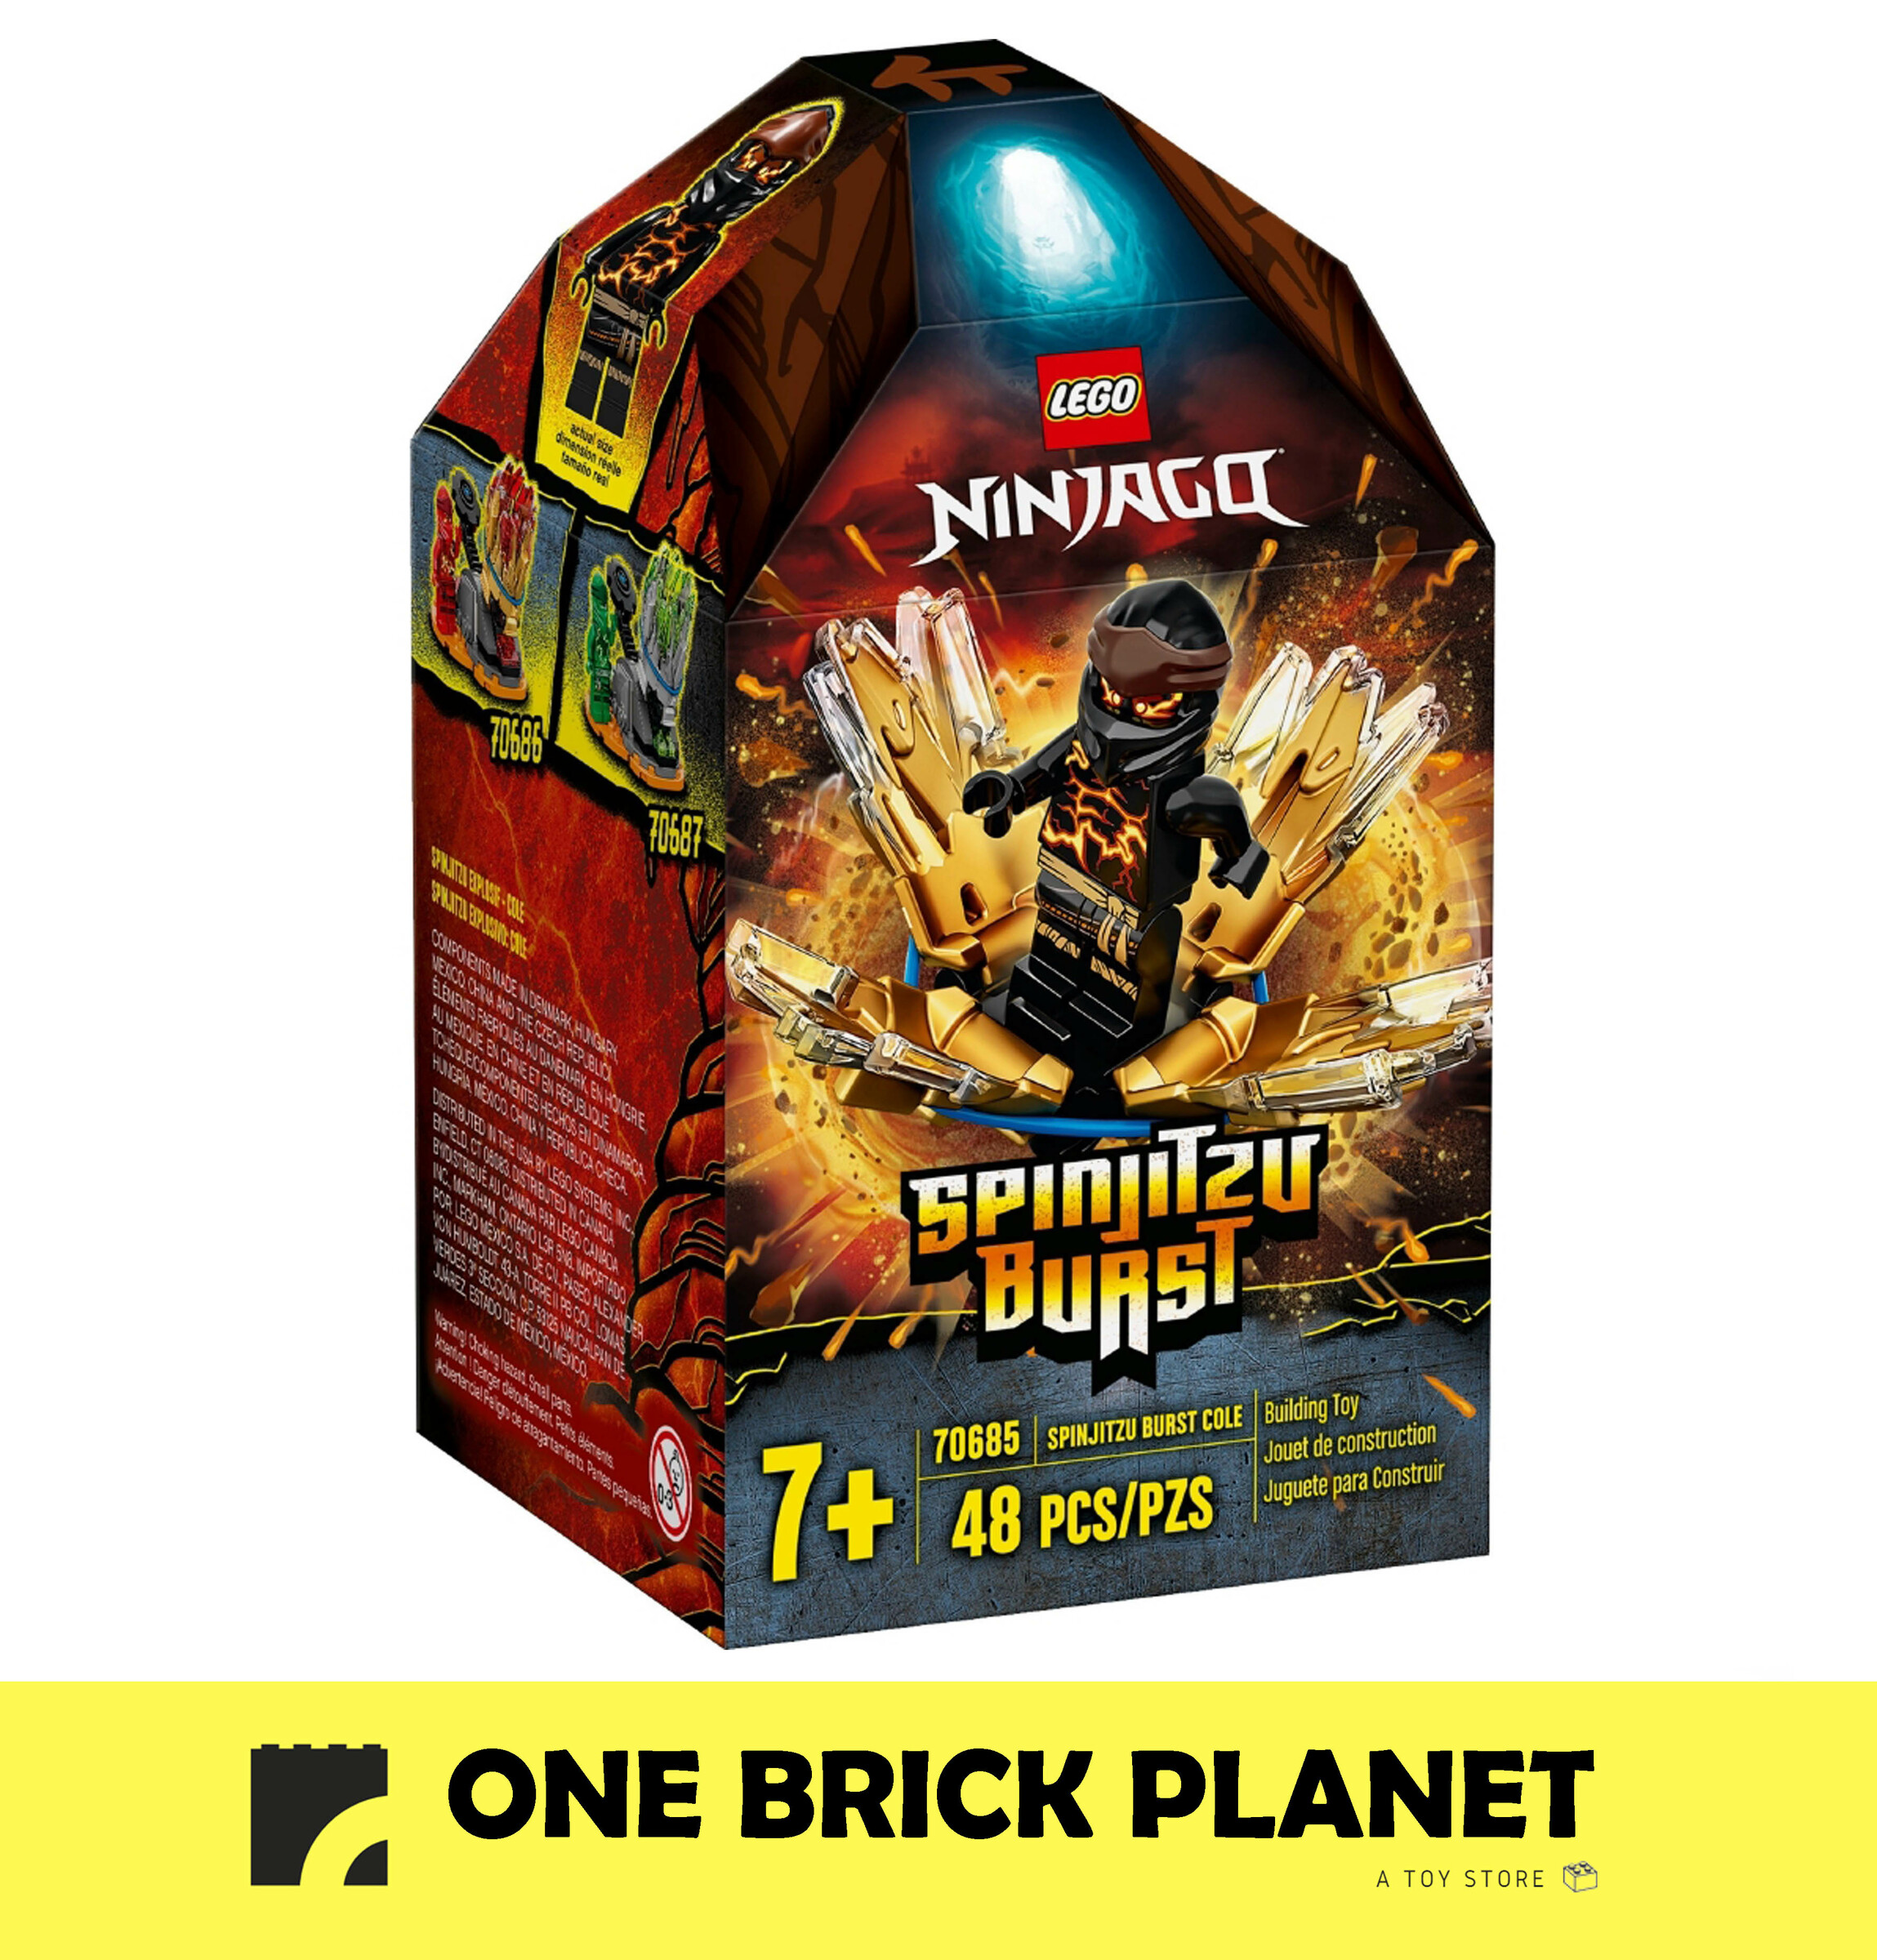 LEGO 70685 Ninjago Spinjitzu Burst - Cole – One Brick Planet